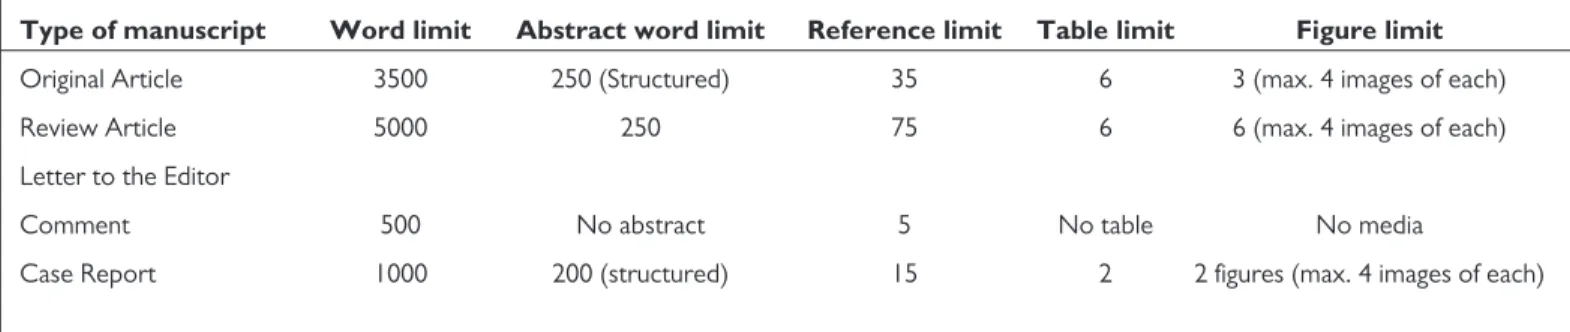 Table 1. Limitations for each manuscript type